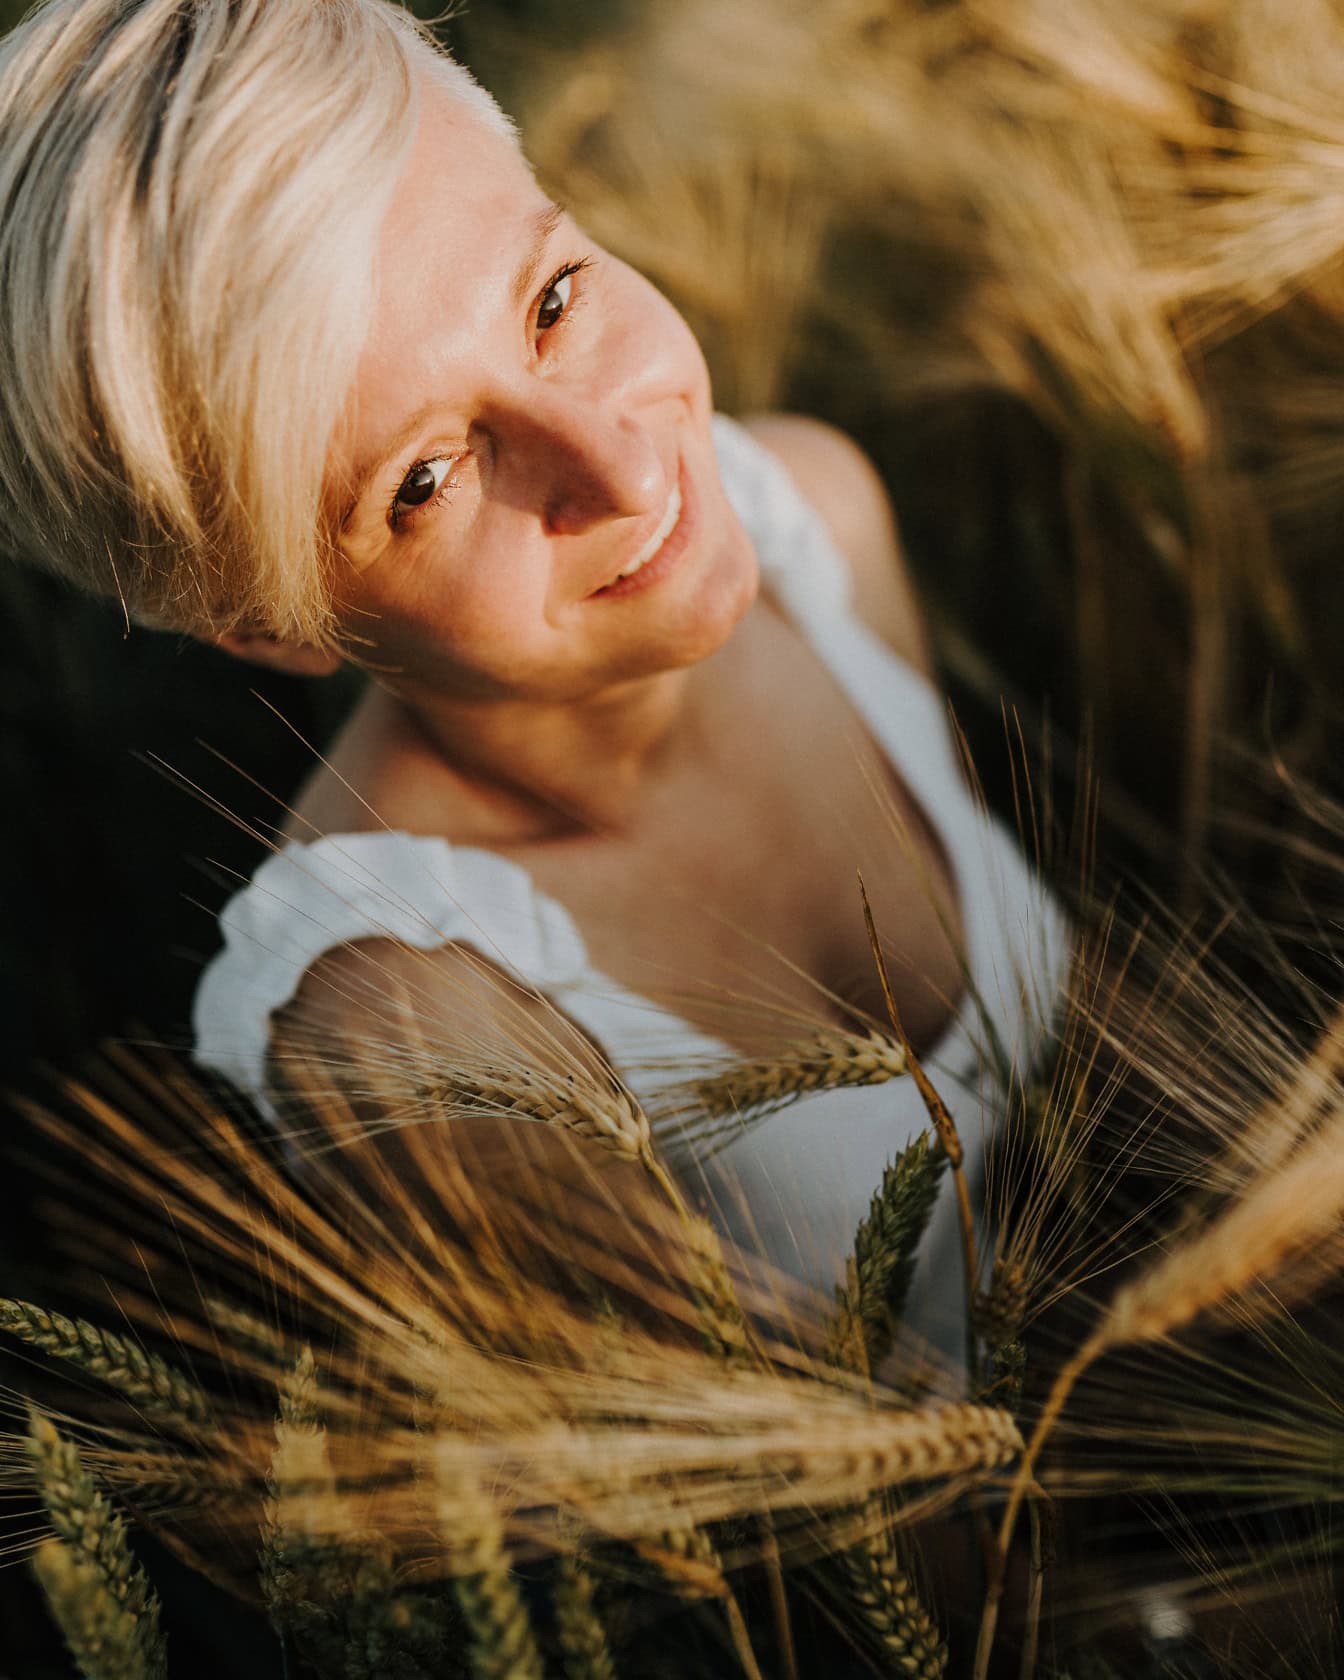 Potret close-up seorang pirang tersenyum dengan rambut pendek berpose di ladang gandum